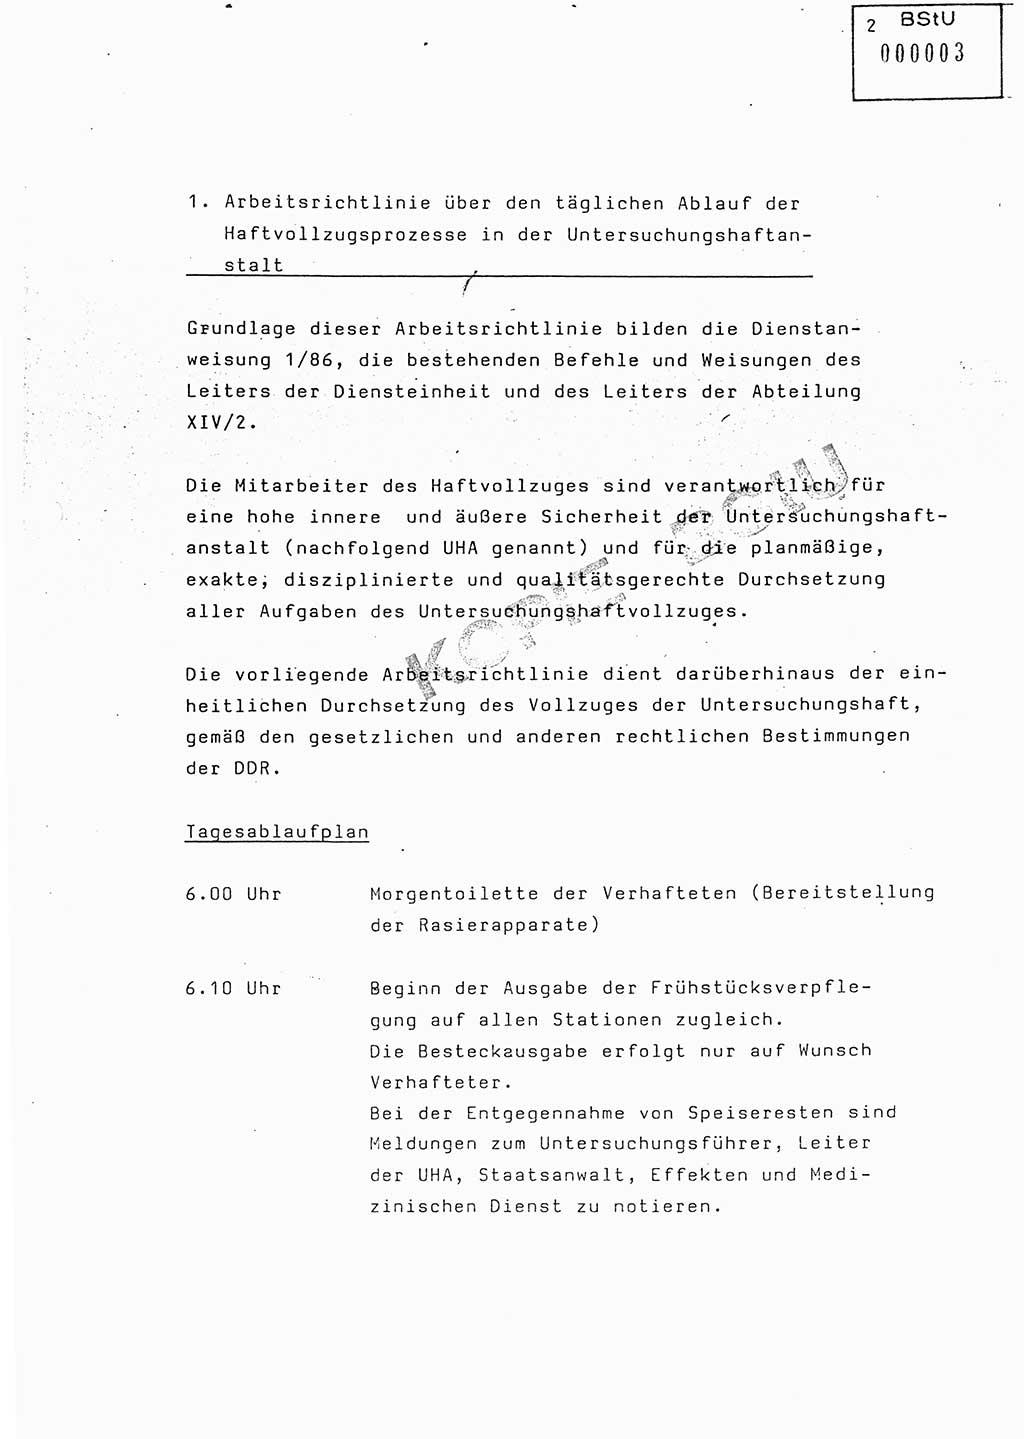 Fachschulabschlußarbeit Oberleutnant Bernd Mekelburg (Abt. ⅩⅣ/2), Oberleutnant Tilo Lilpopp (Abt. ⅩⅣ/2), Ministerium für Staatssicherheit (MfS) [Deutsche Demokratische Republik (DDR)], Abteilung ⅩⅣ, o.D., o.O, o.J., ca. 1986 wg. Bez. DA 1/86, Seite 2 (FS-Abschl.-Arb. MfS DDR Abt. ⅩⅣ 1986, S. 2)